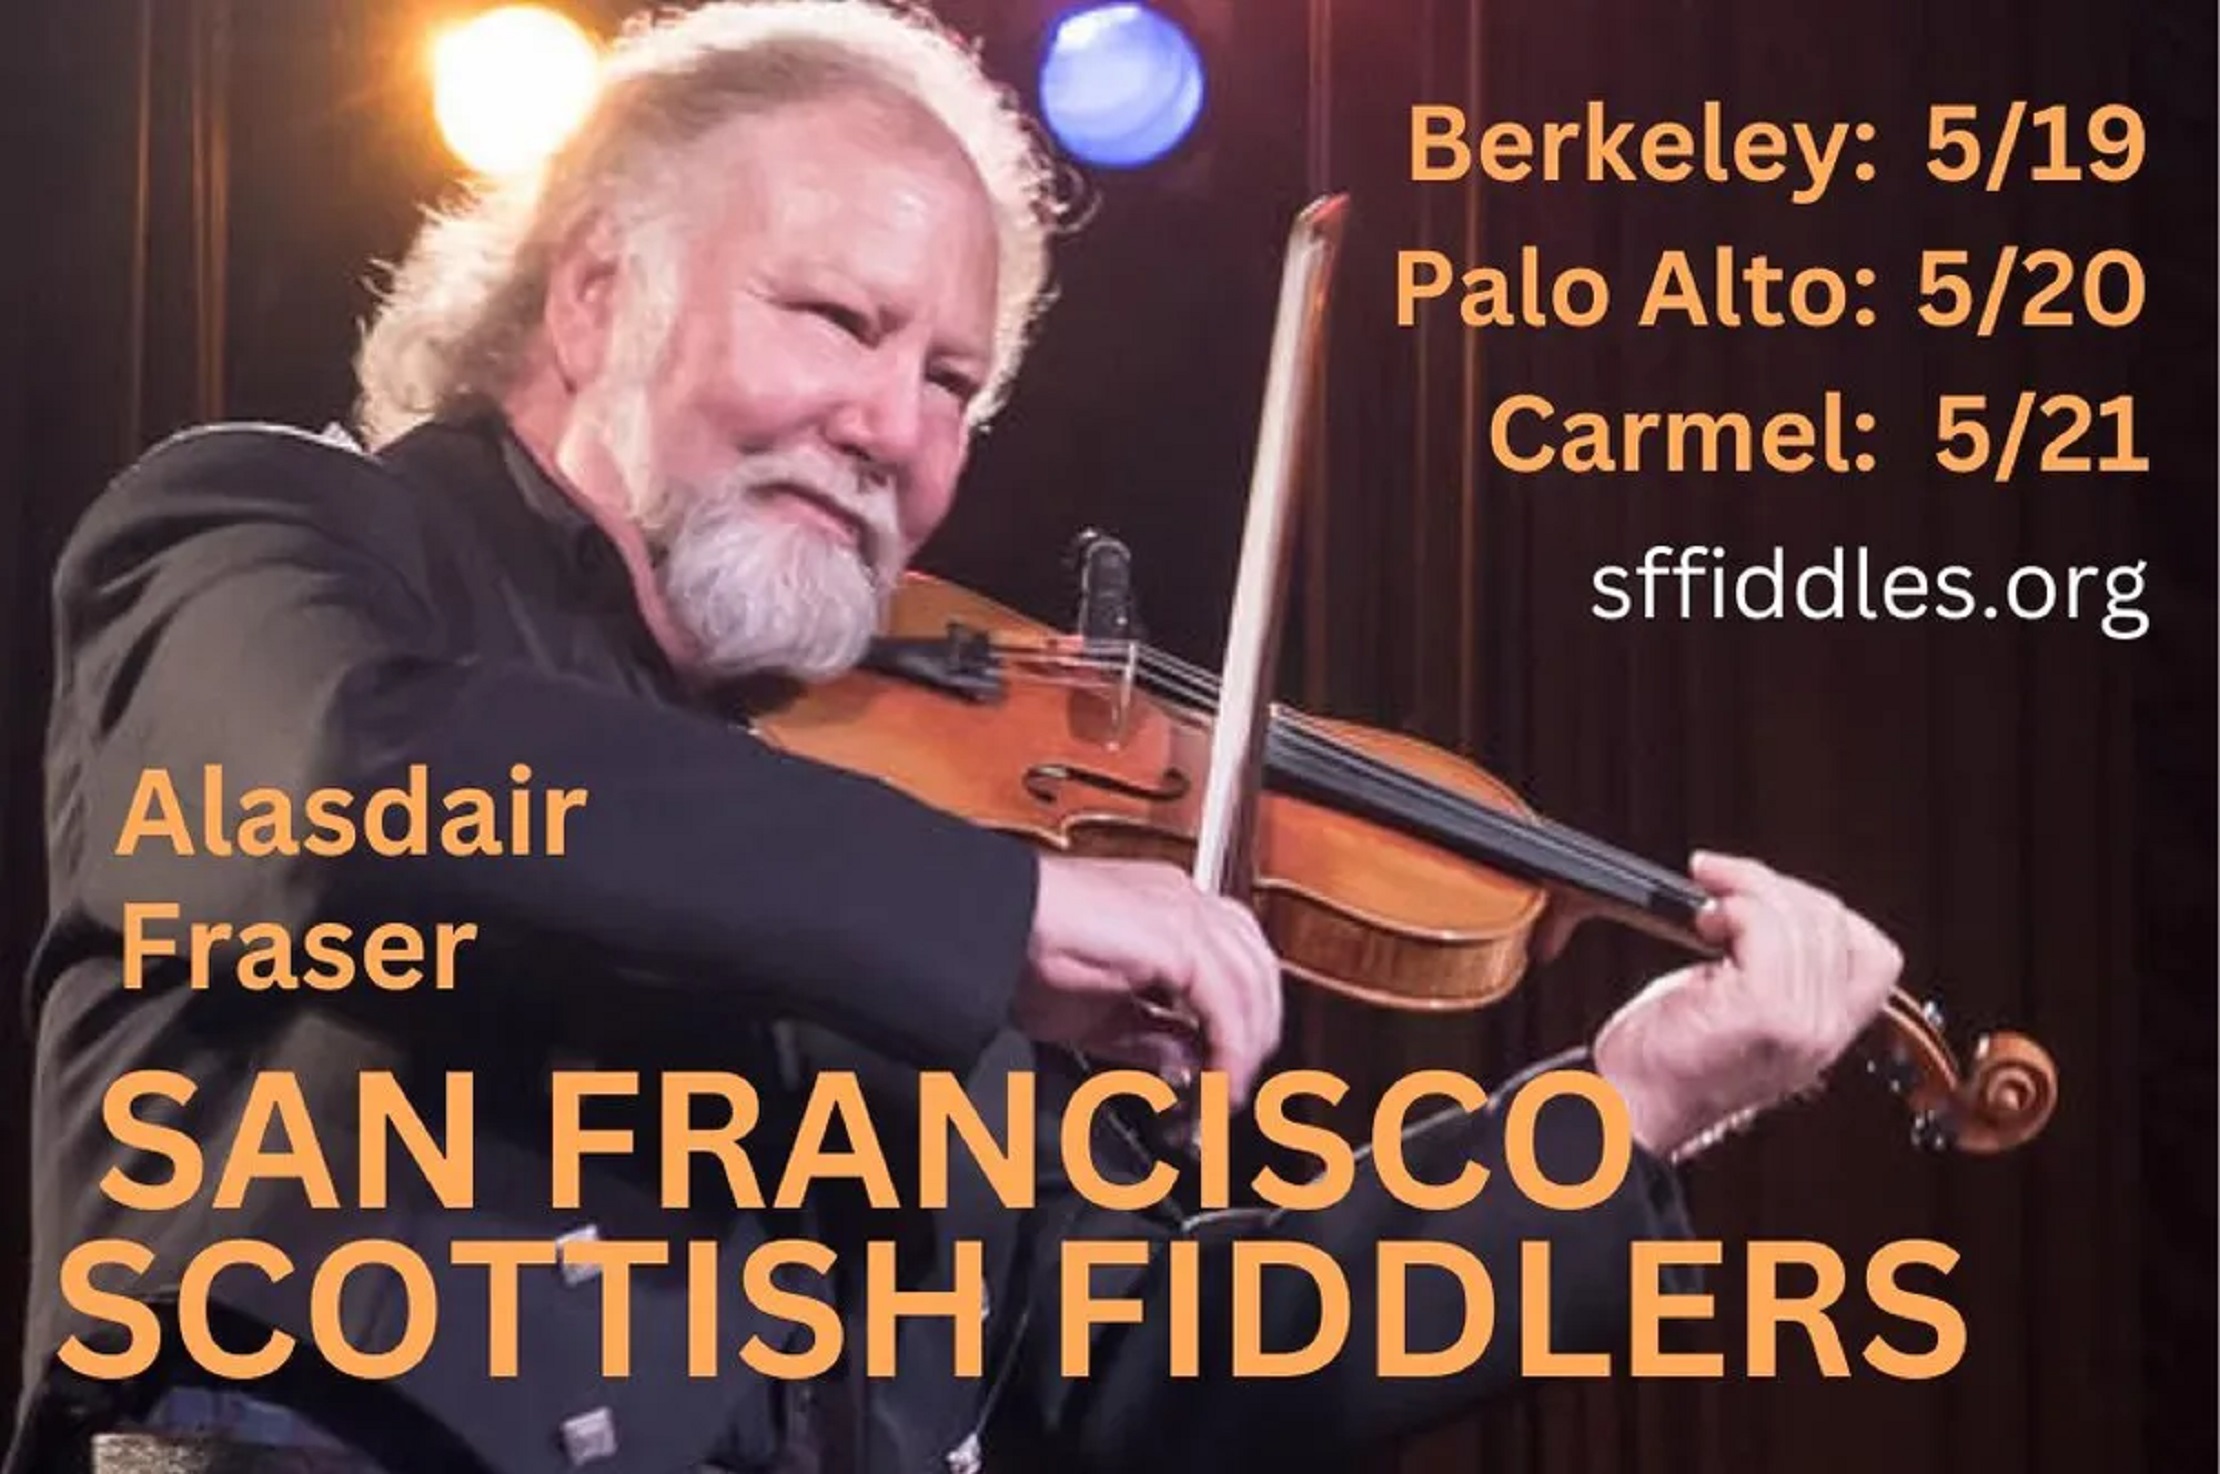 The San Francisco Scottish Fiddlers starring Alasdair Fraser